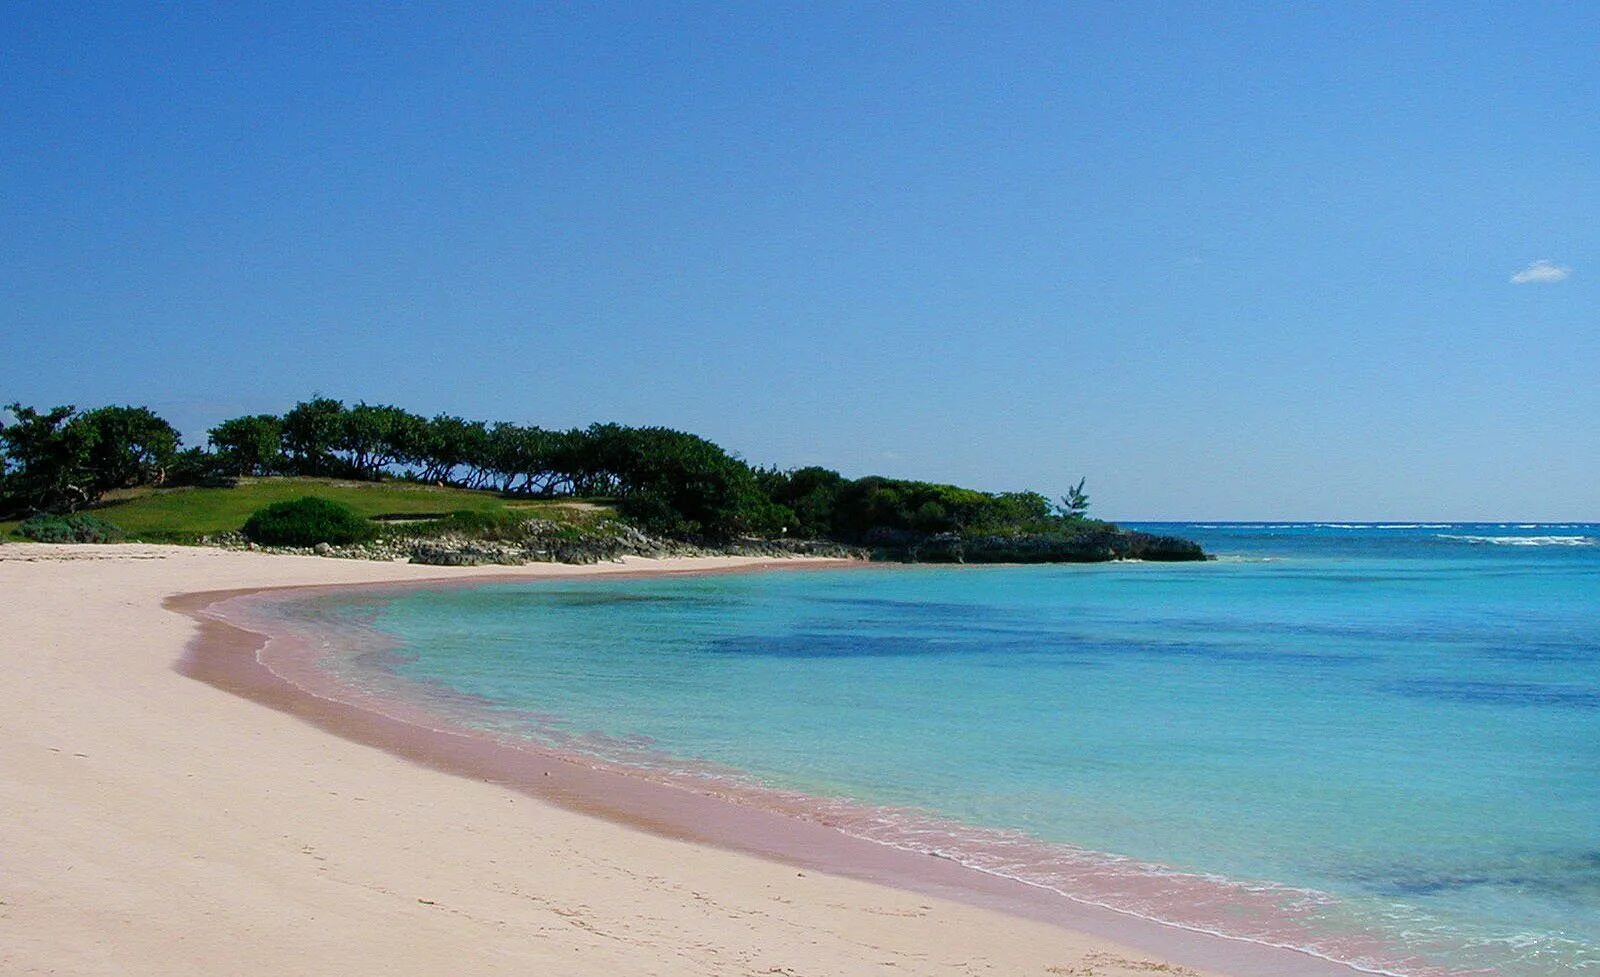 Harbor island. Остров Харбор Багамские острова. Pink Sands Beach Багамские острова. Харбор Айленд Багамы. Пляж Пинк Сэндс Бич Багамские острова.